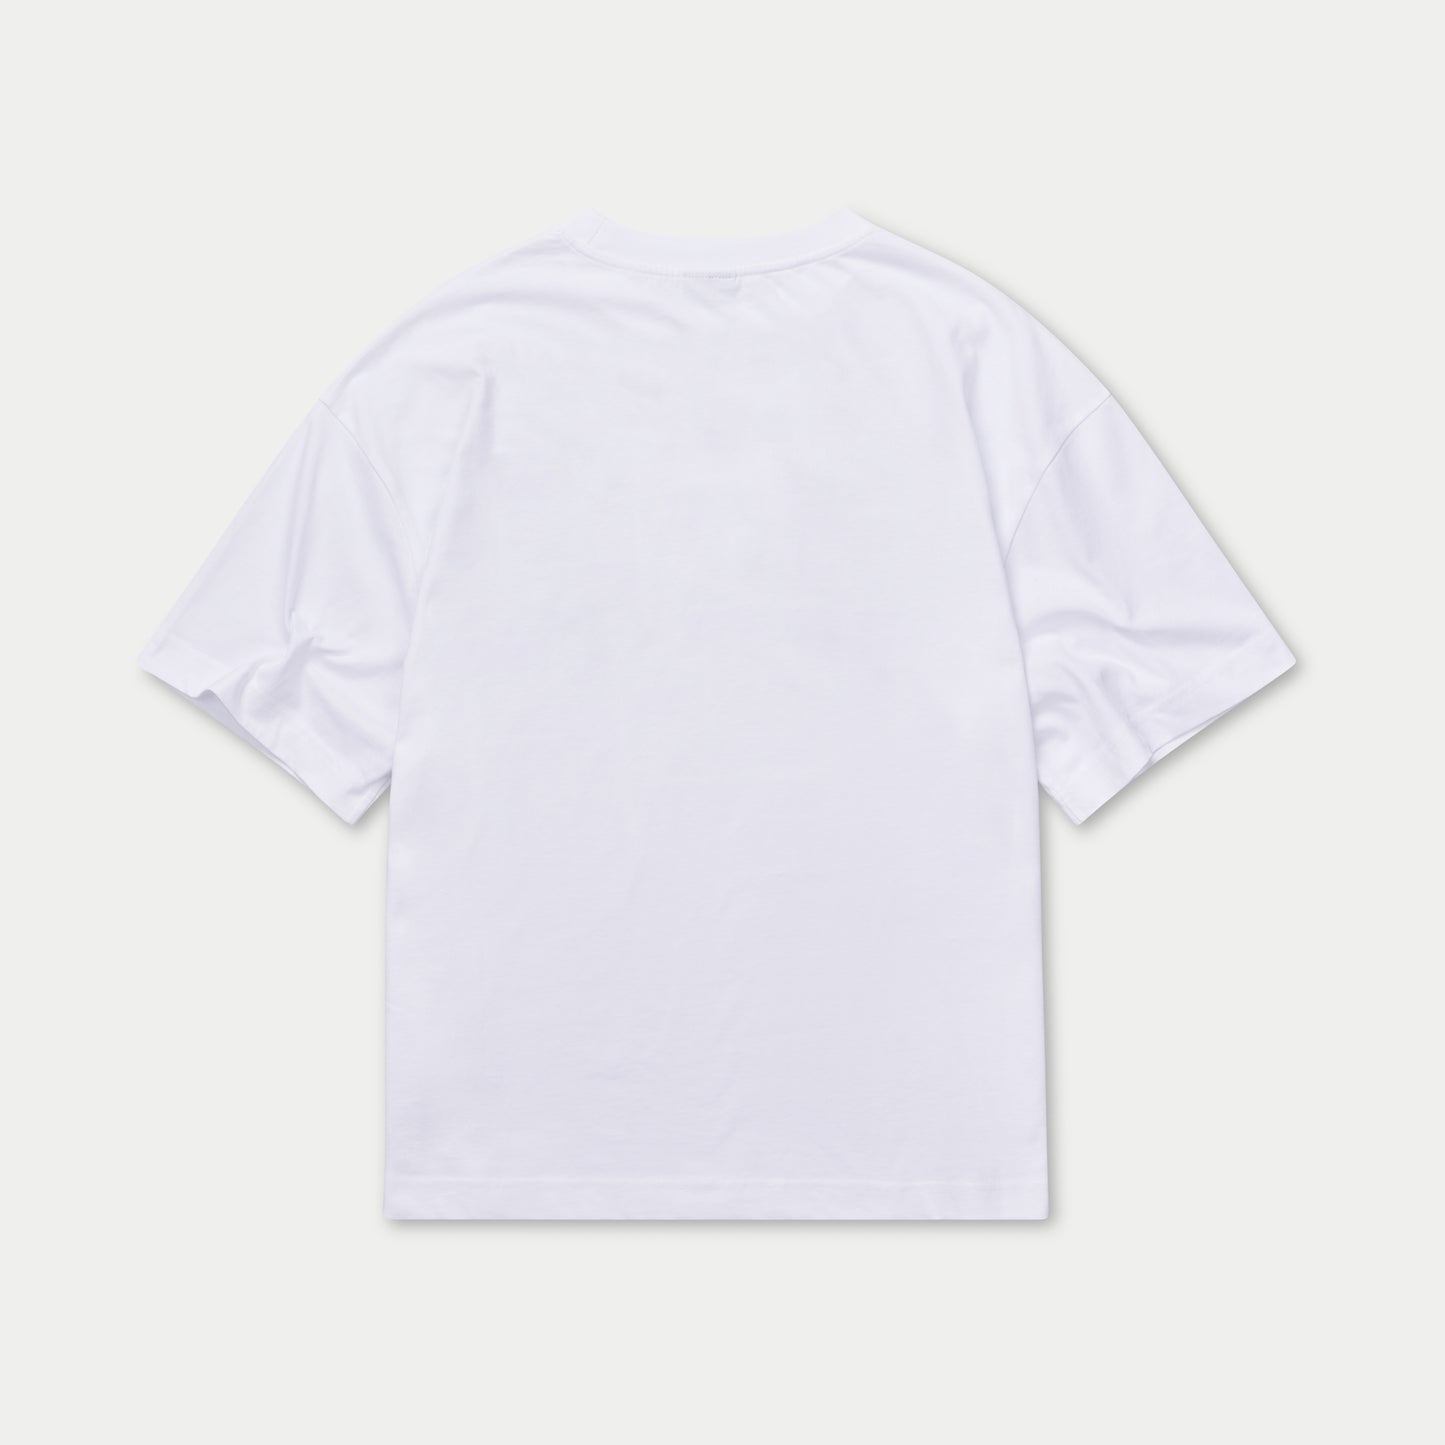 REWEAR 365 Oversized T-Shirt - White